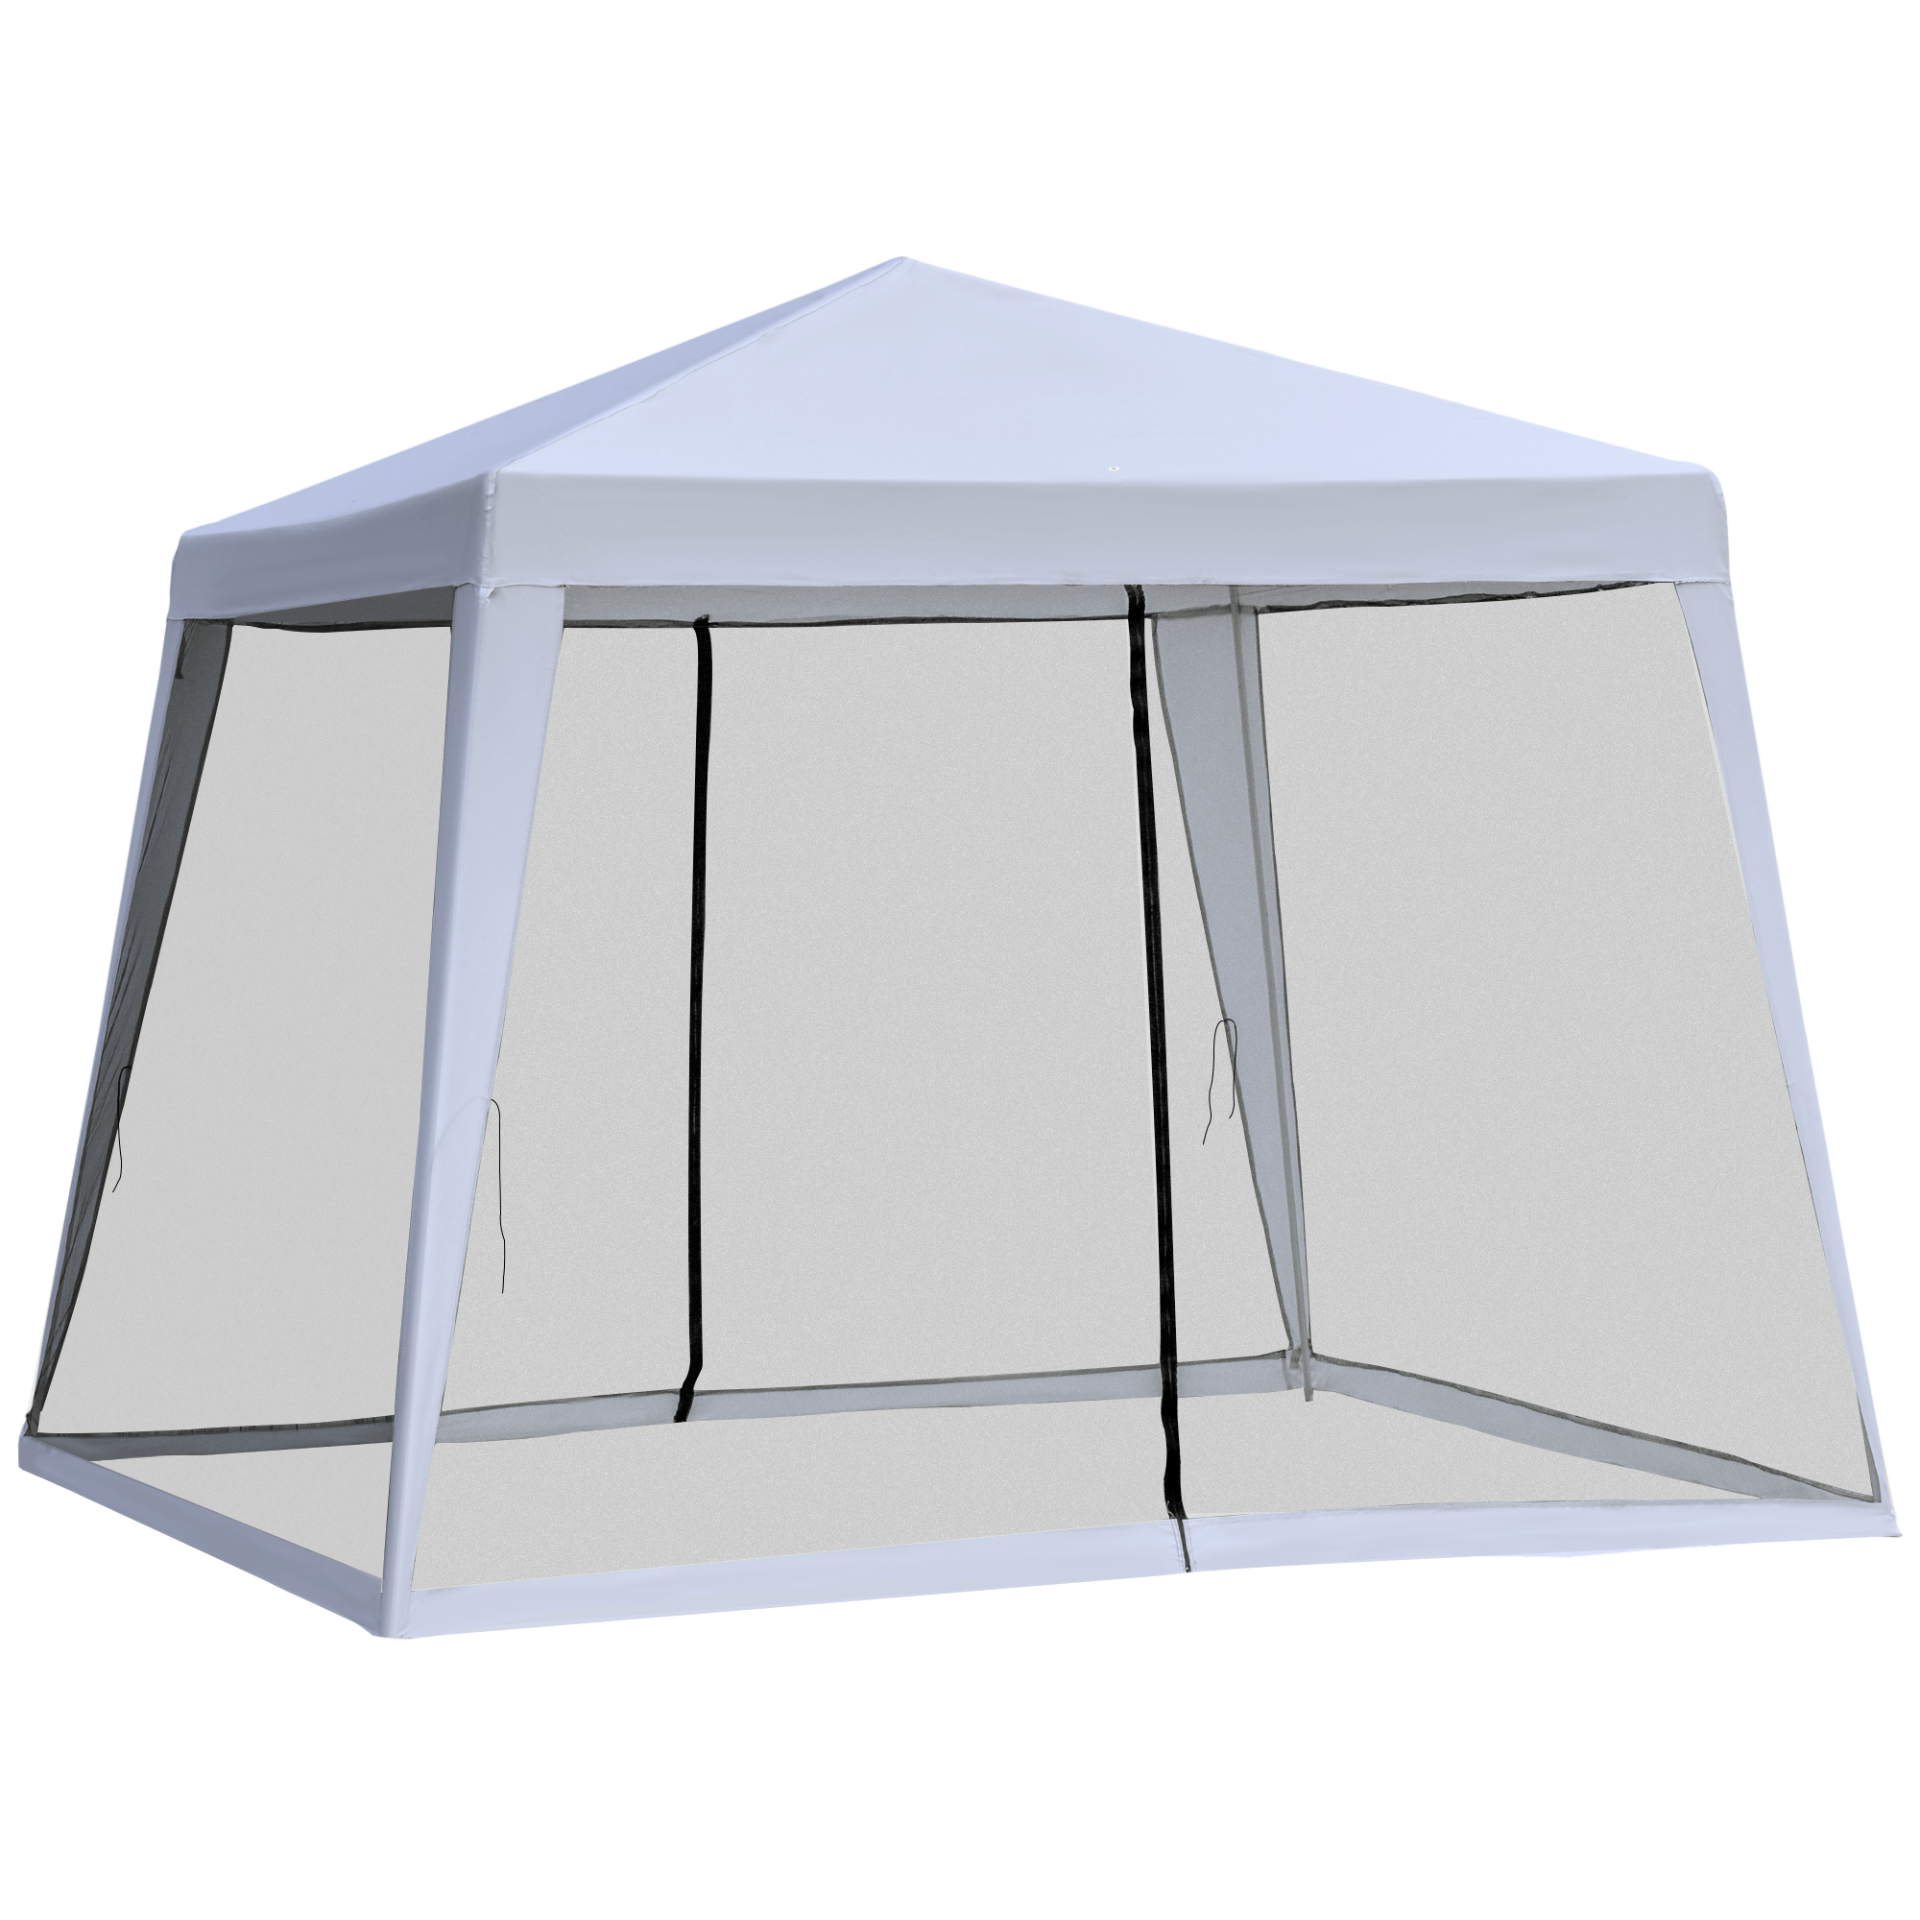 Outsunny 3 x 3 meter Outdoor Garden Gazebo Canopy Tent Sun Shade Event Shelter w